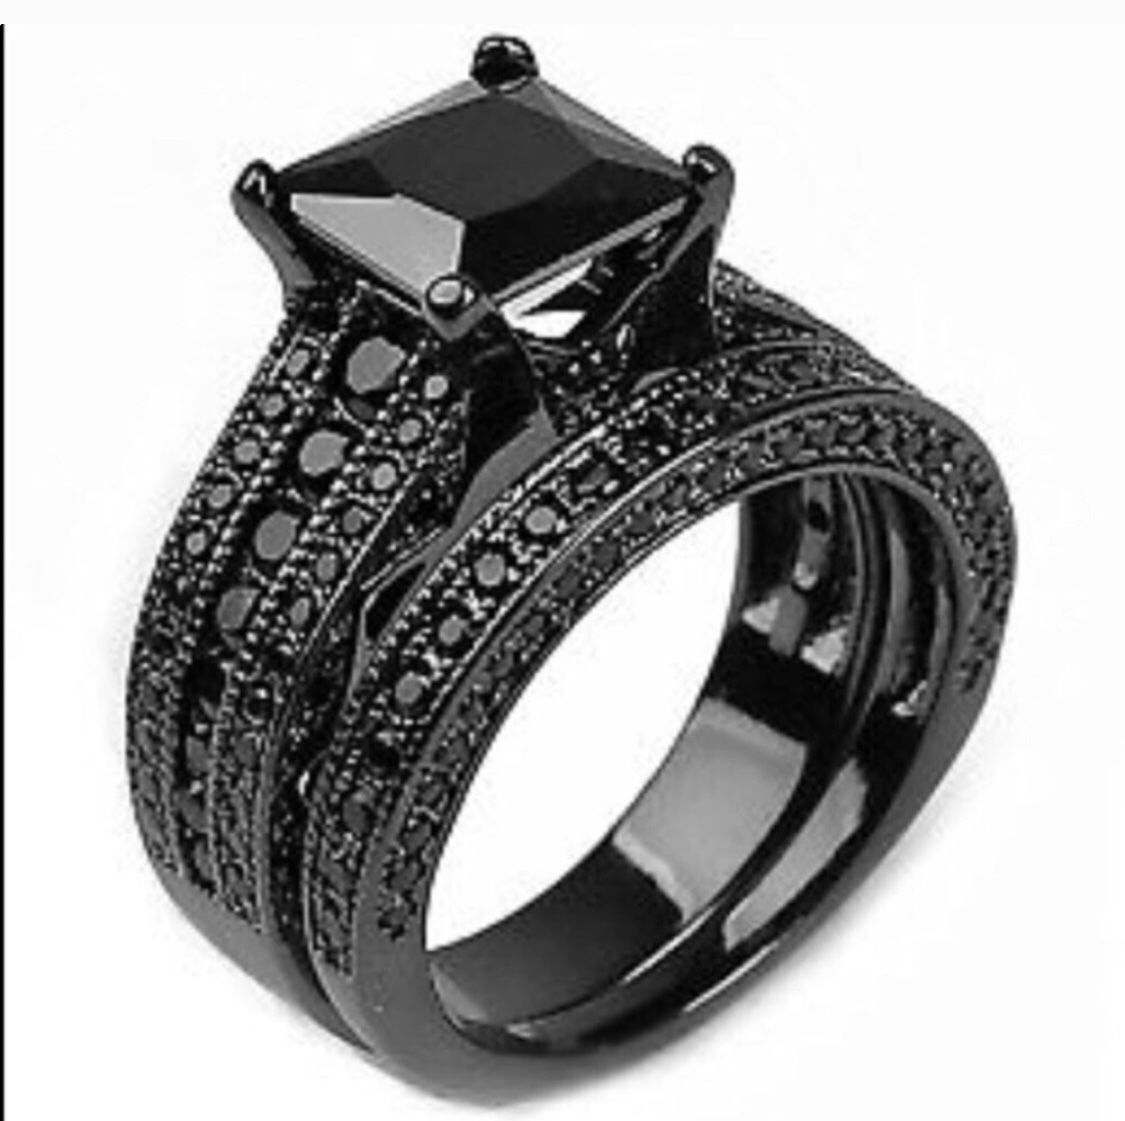 Brand new s925 black gunmetal wedding ring set engagement ring